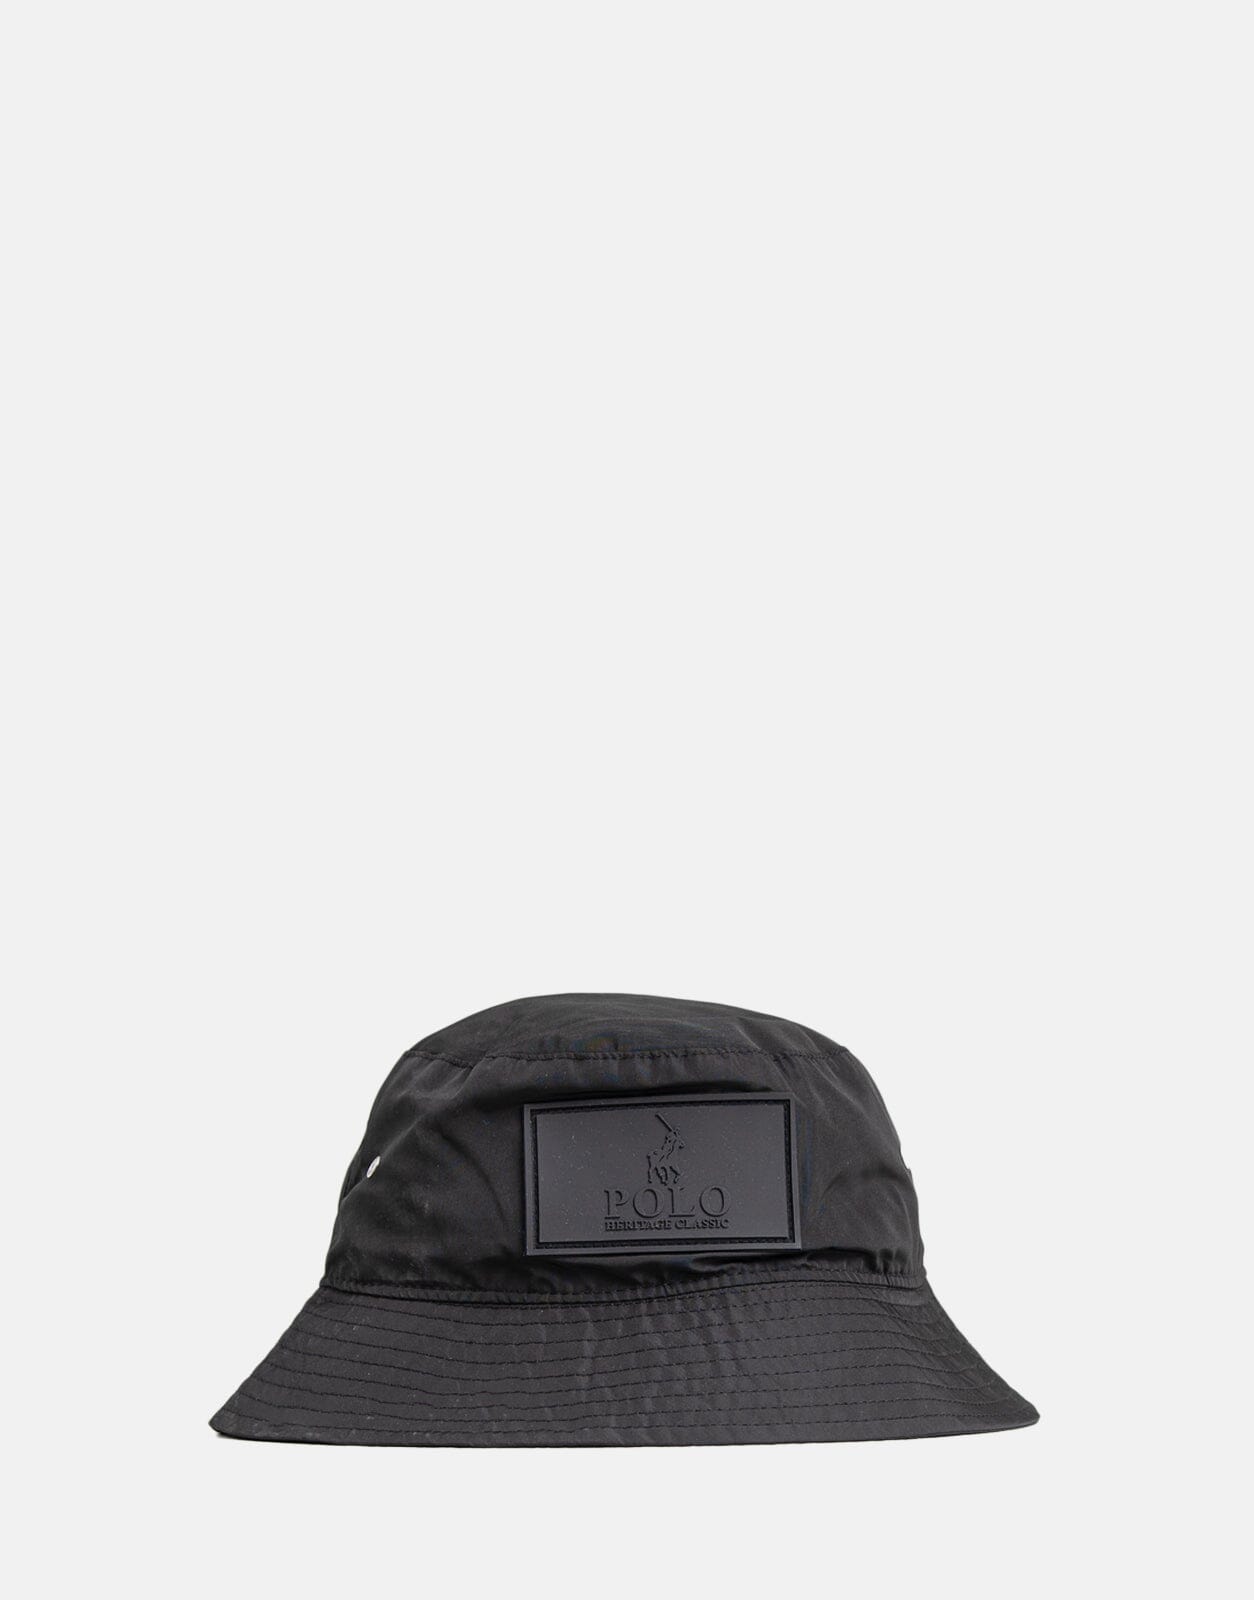 Polo Rubberised Badge Black Bucket Hat - Subwear